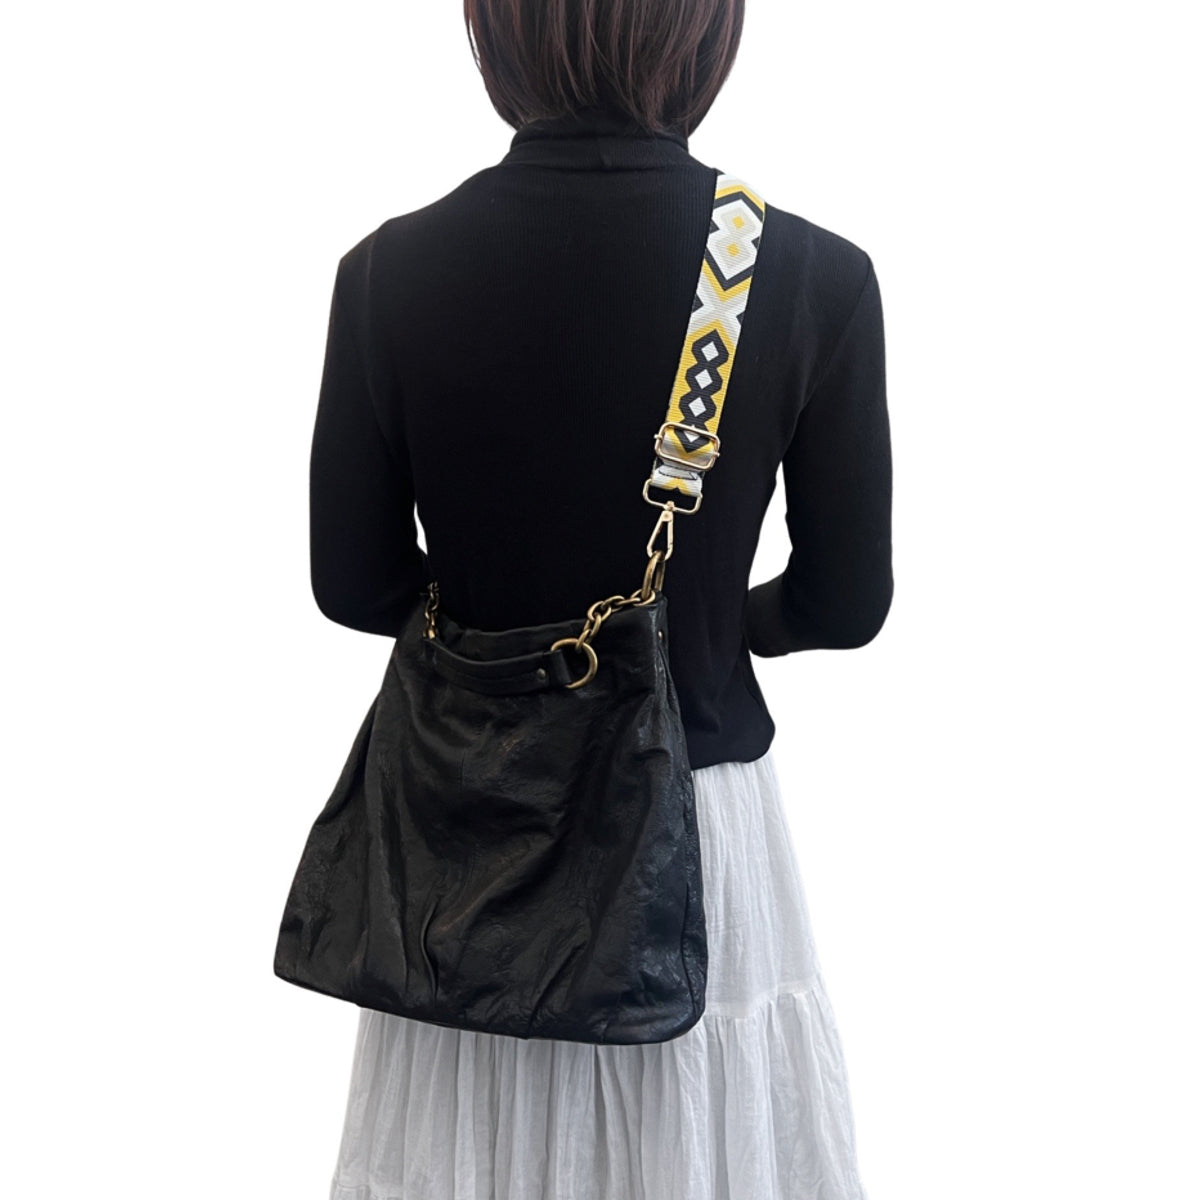 Wide Shoulder Strap Adjustable Replacement Belt Crossbody Canvas Bag H –  ZOOEASS